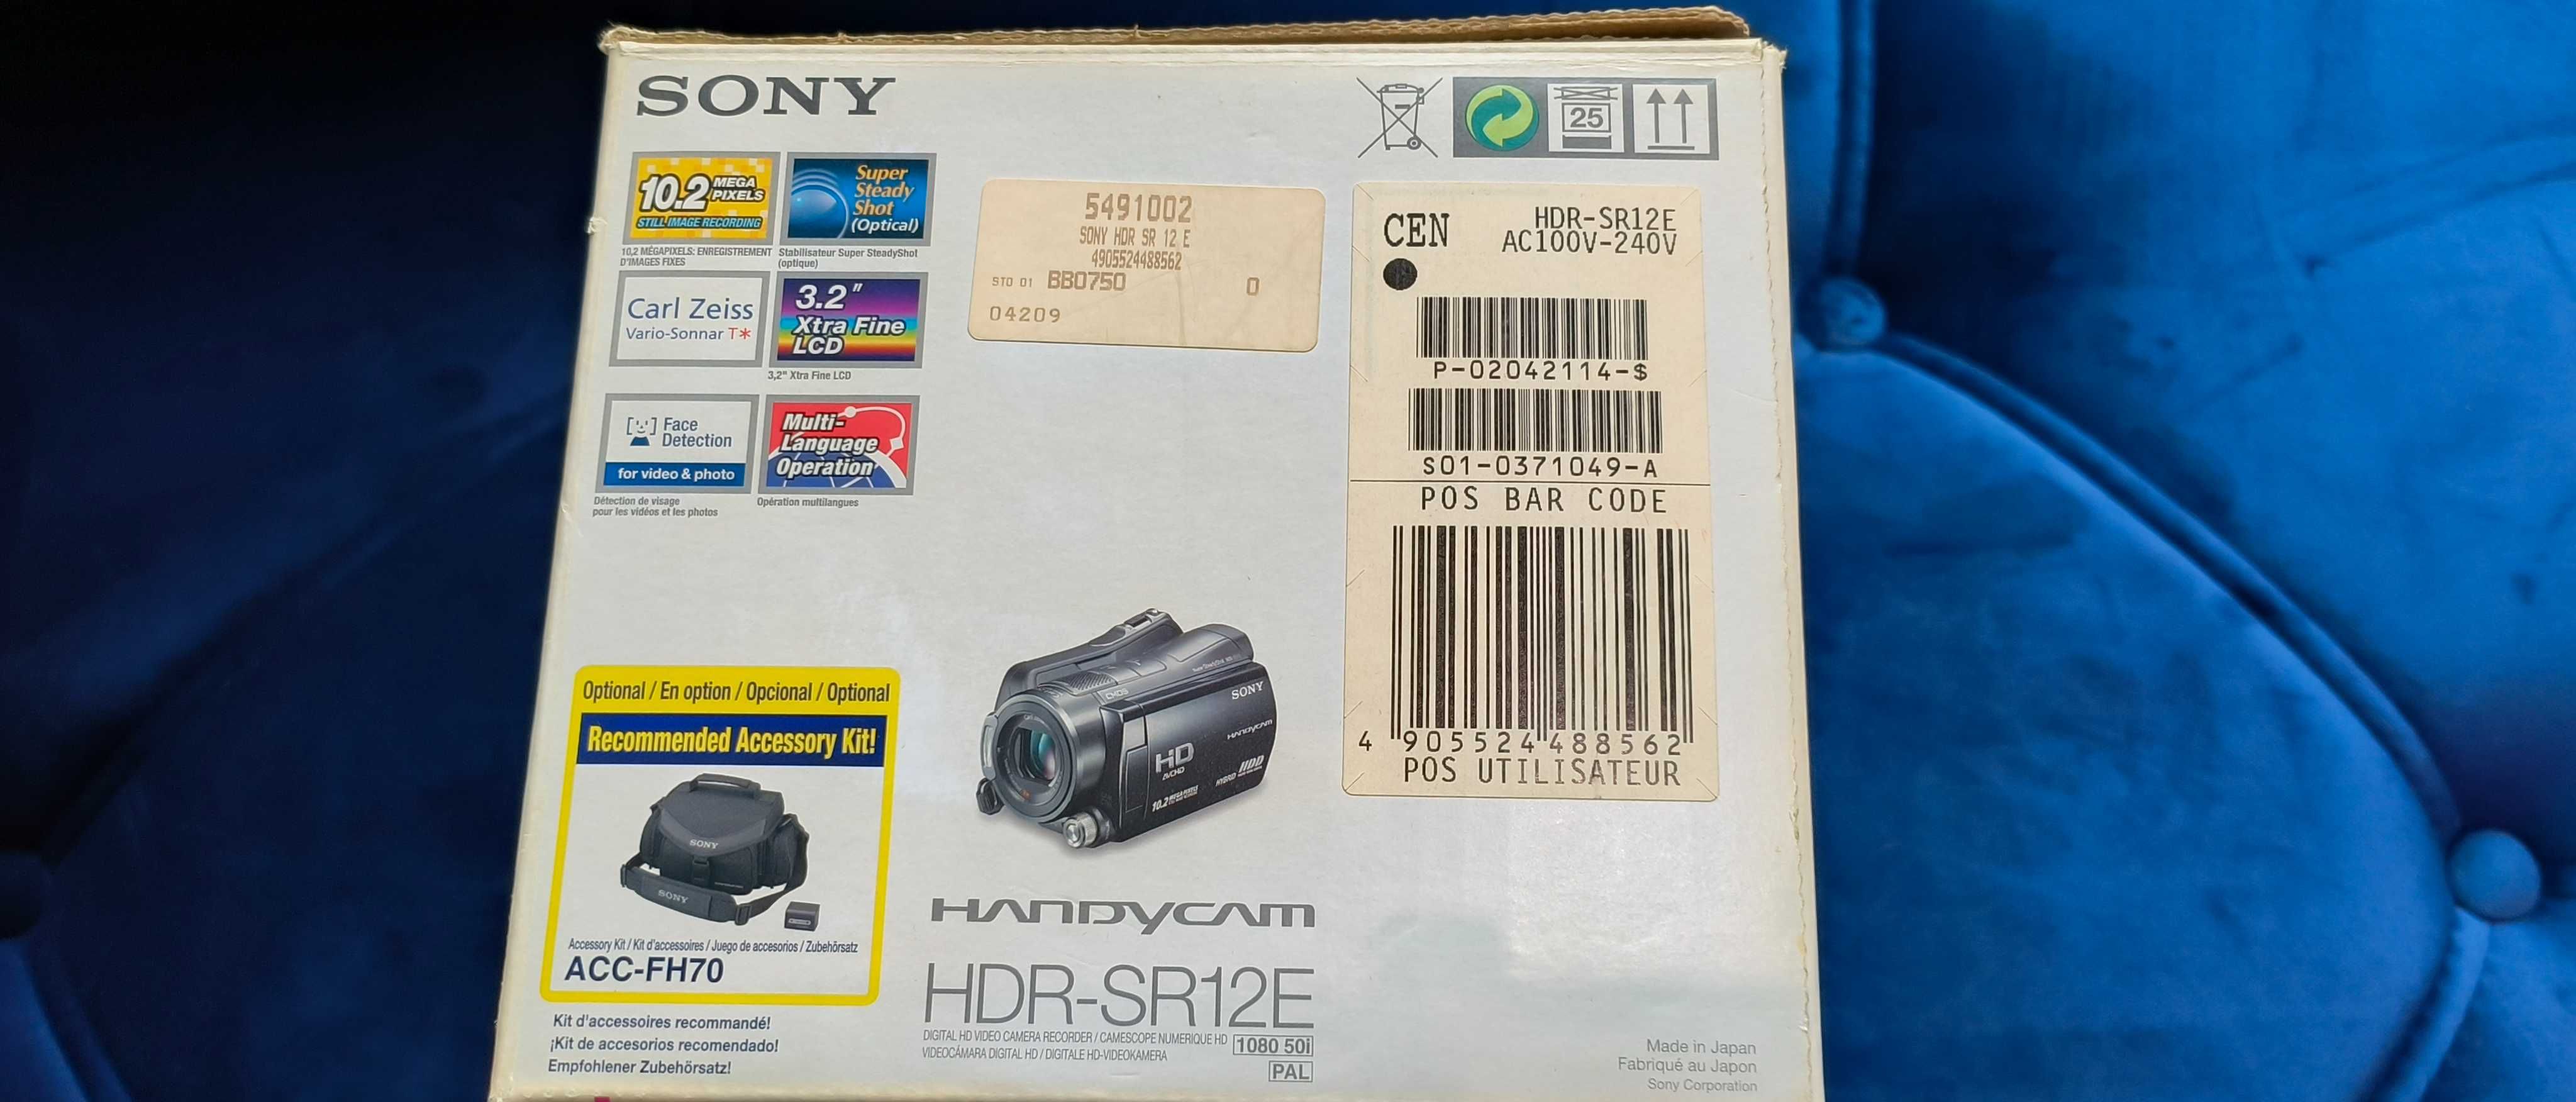 Sony HDR-SR12E 120 GB